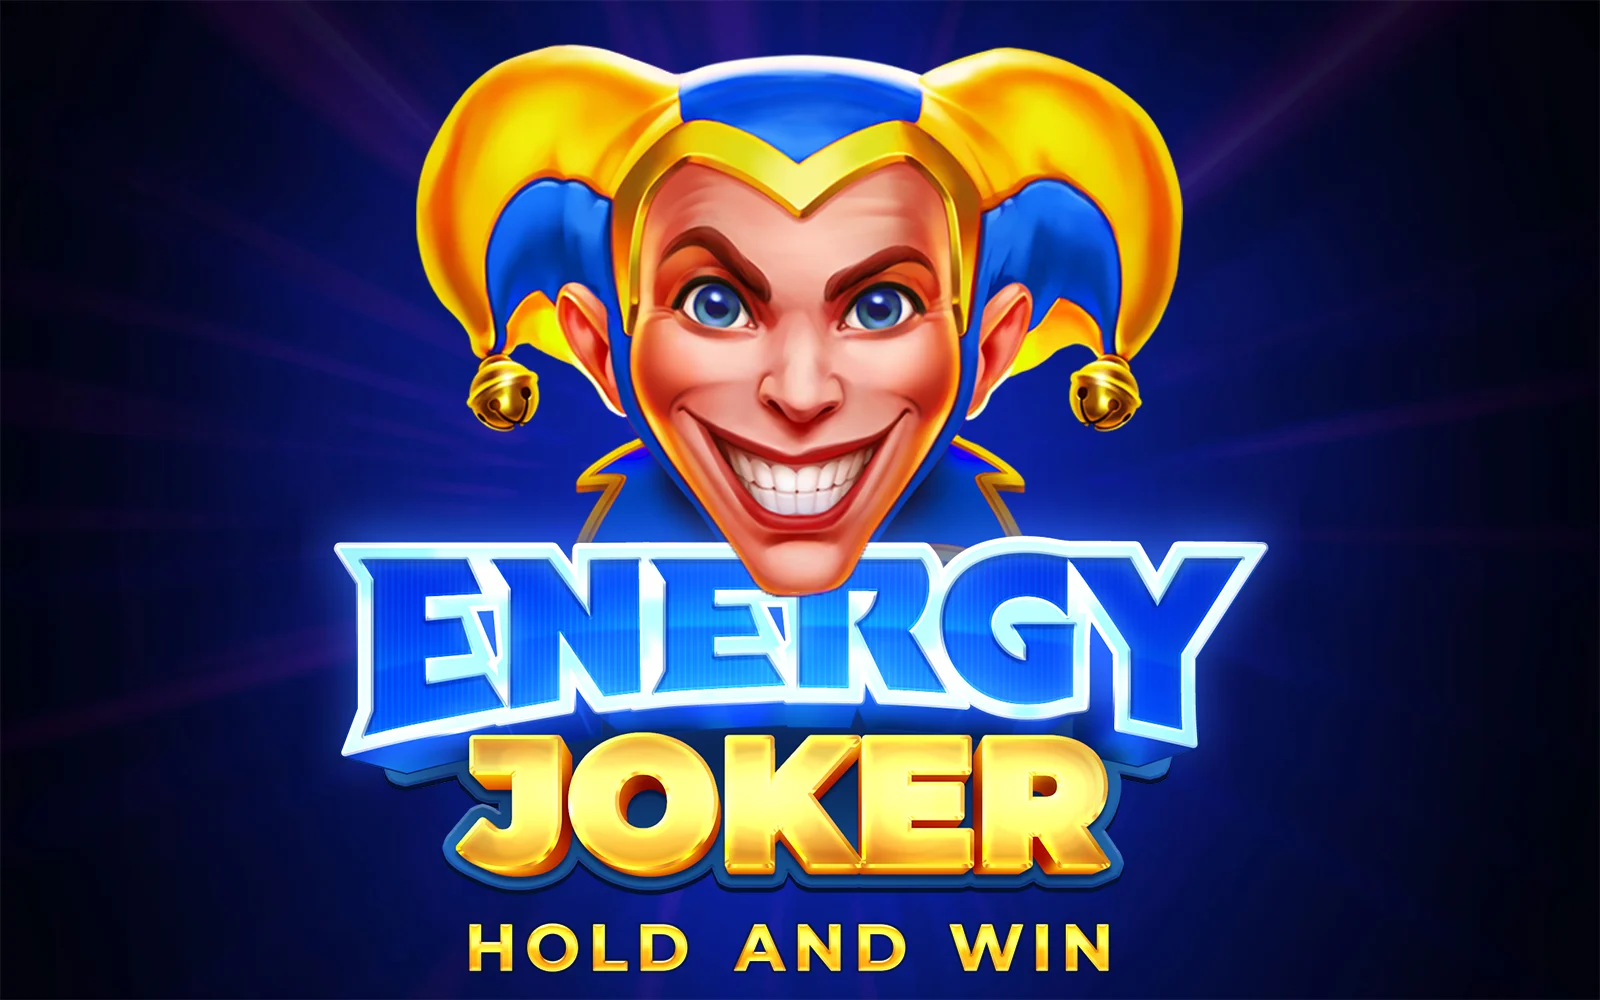 Juega a Energy Joker: Hold and Win en el casino en línea de Starcasino.be